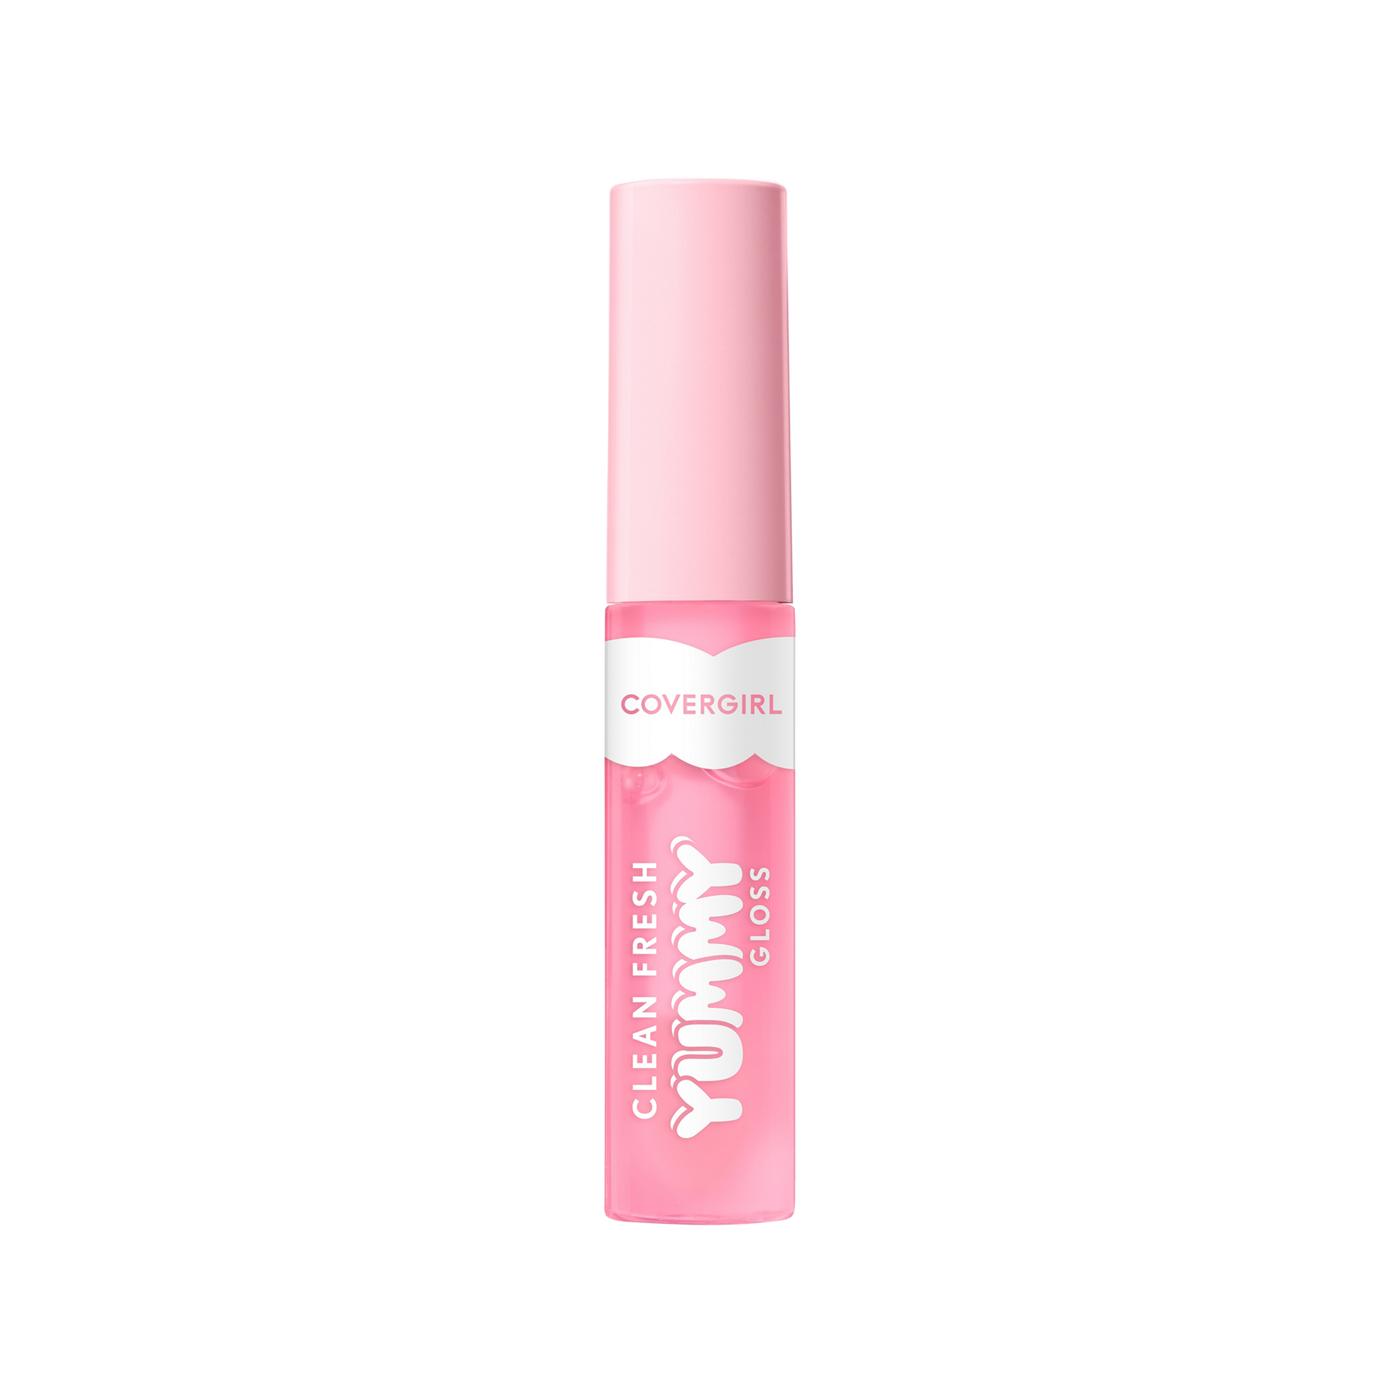 Covergirl Clean Fresh Yummy Lip Gloss - Sugar Poppy; image 1 of 10